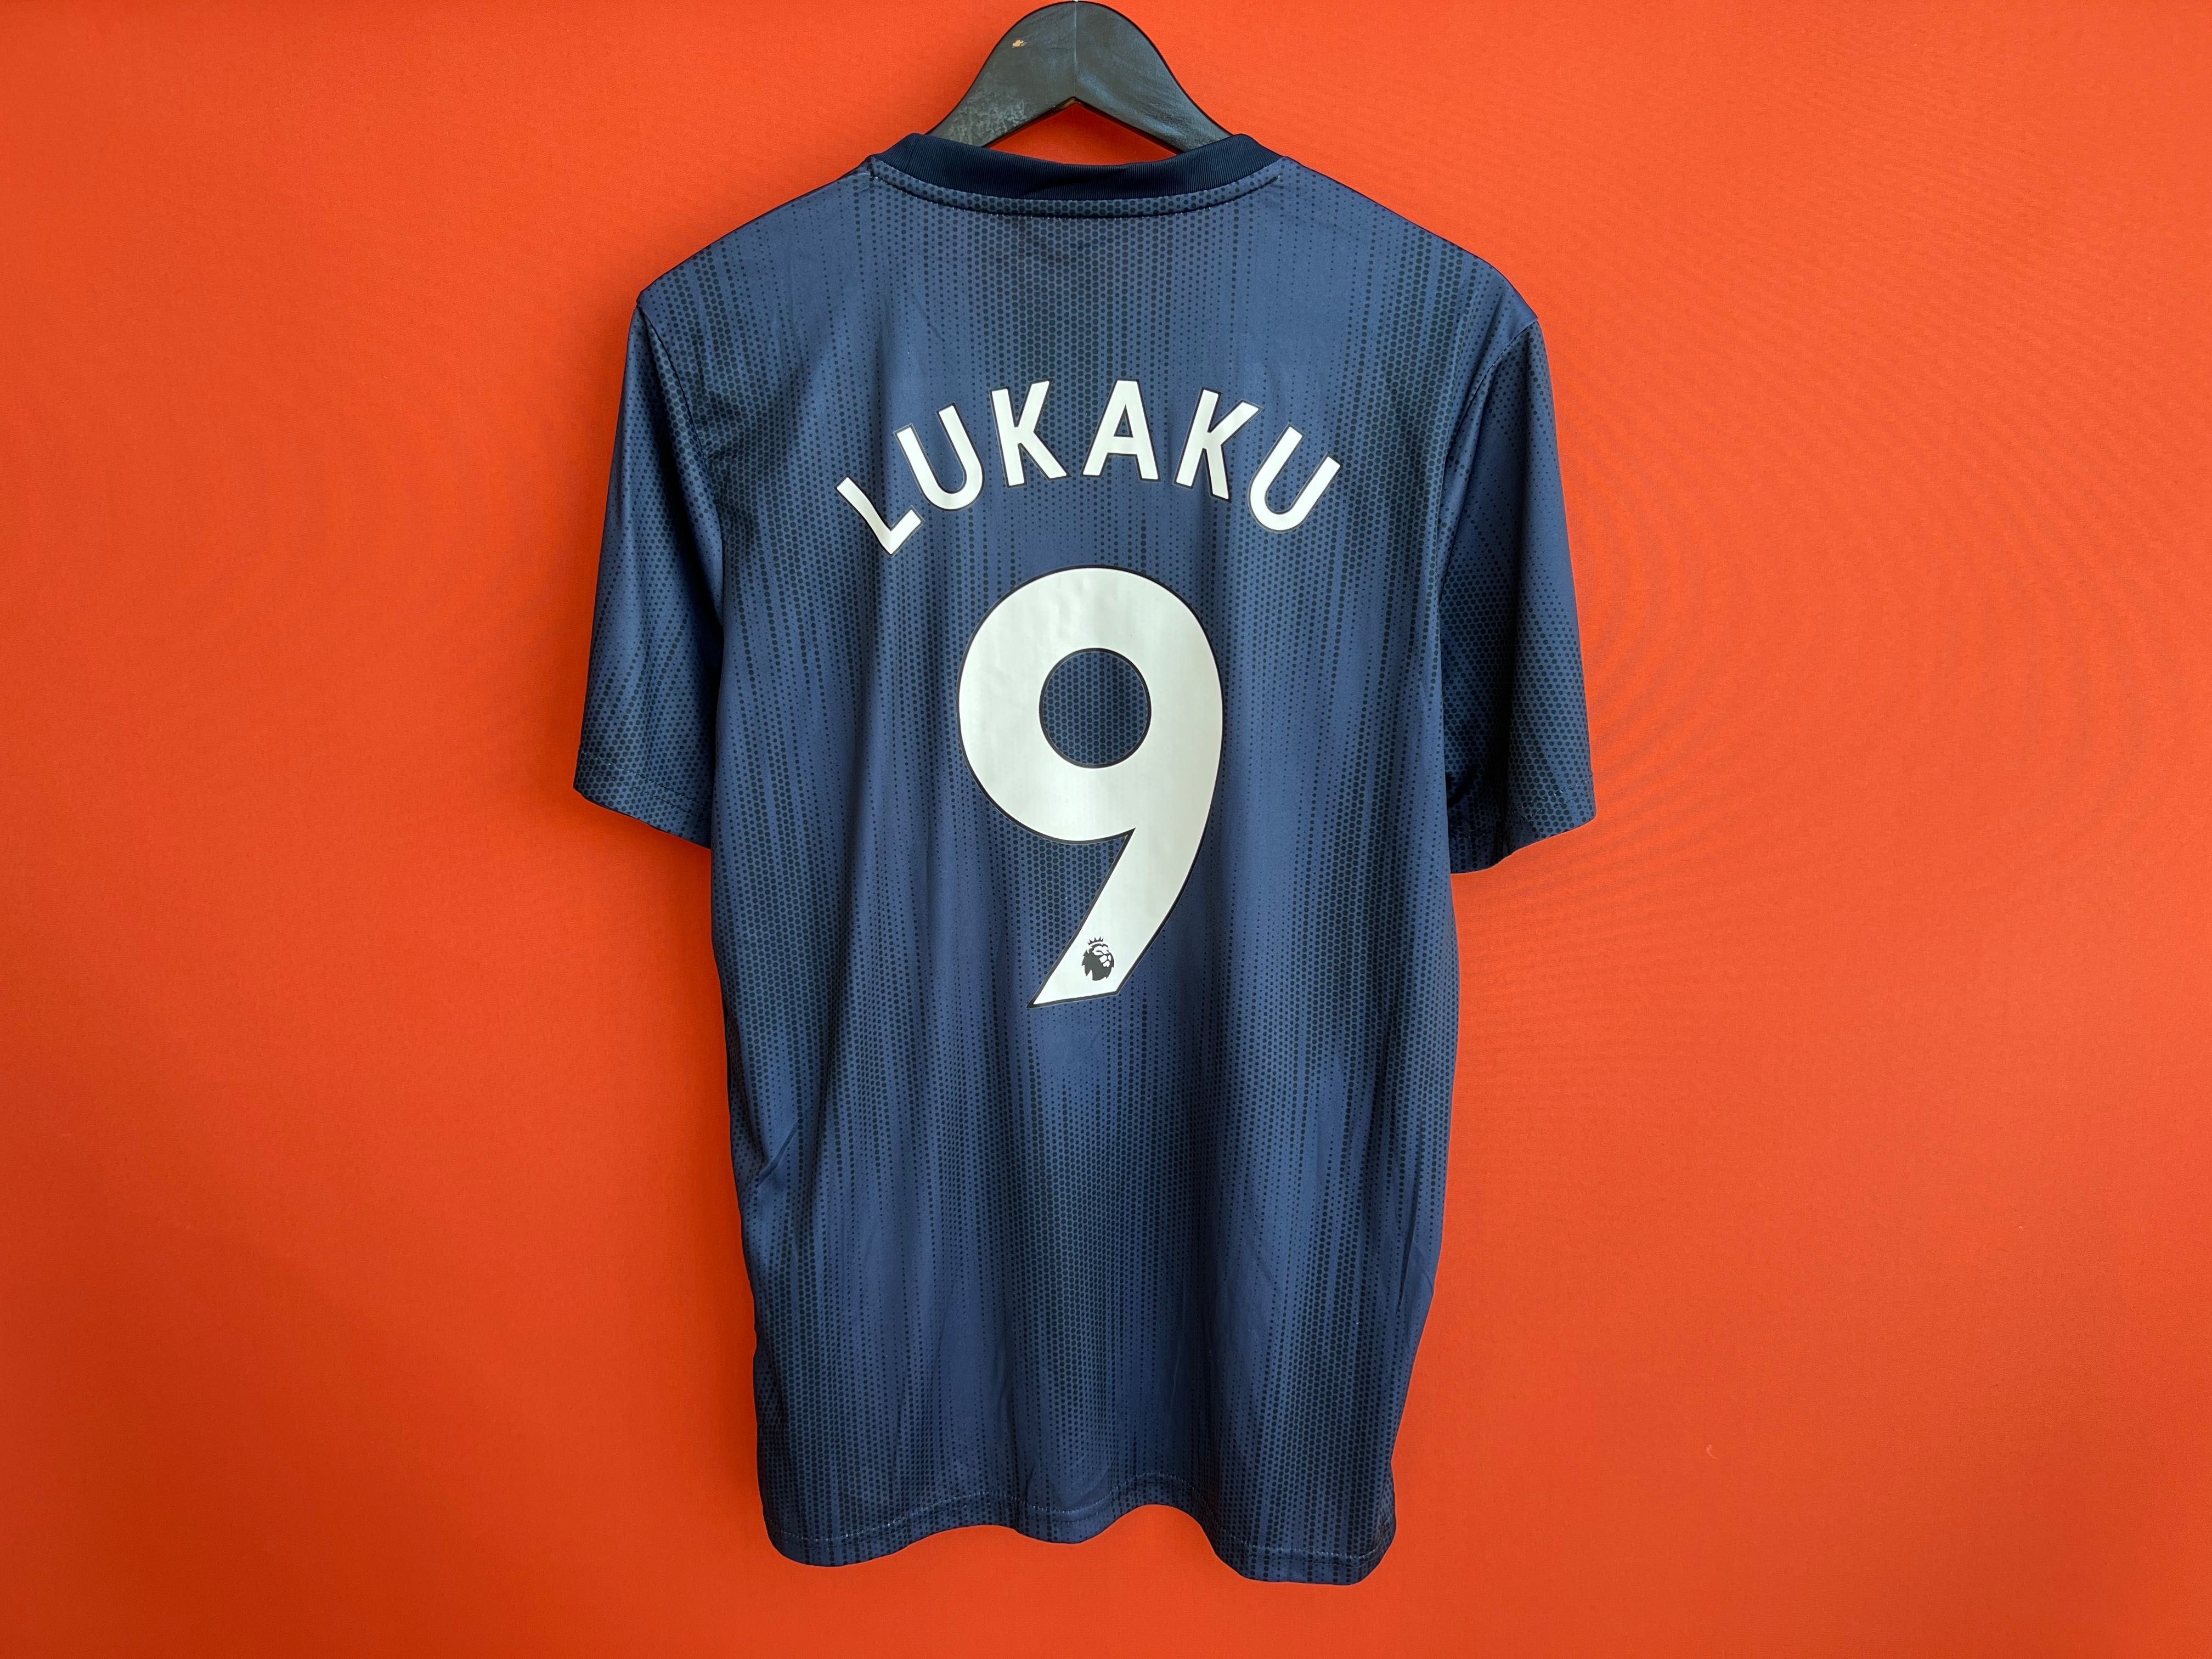 Adidas Manchester United Lukaku футболка футбольная форма размер M